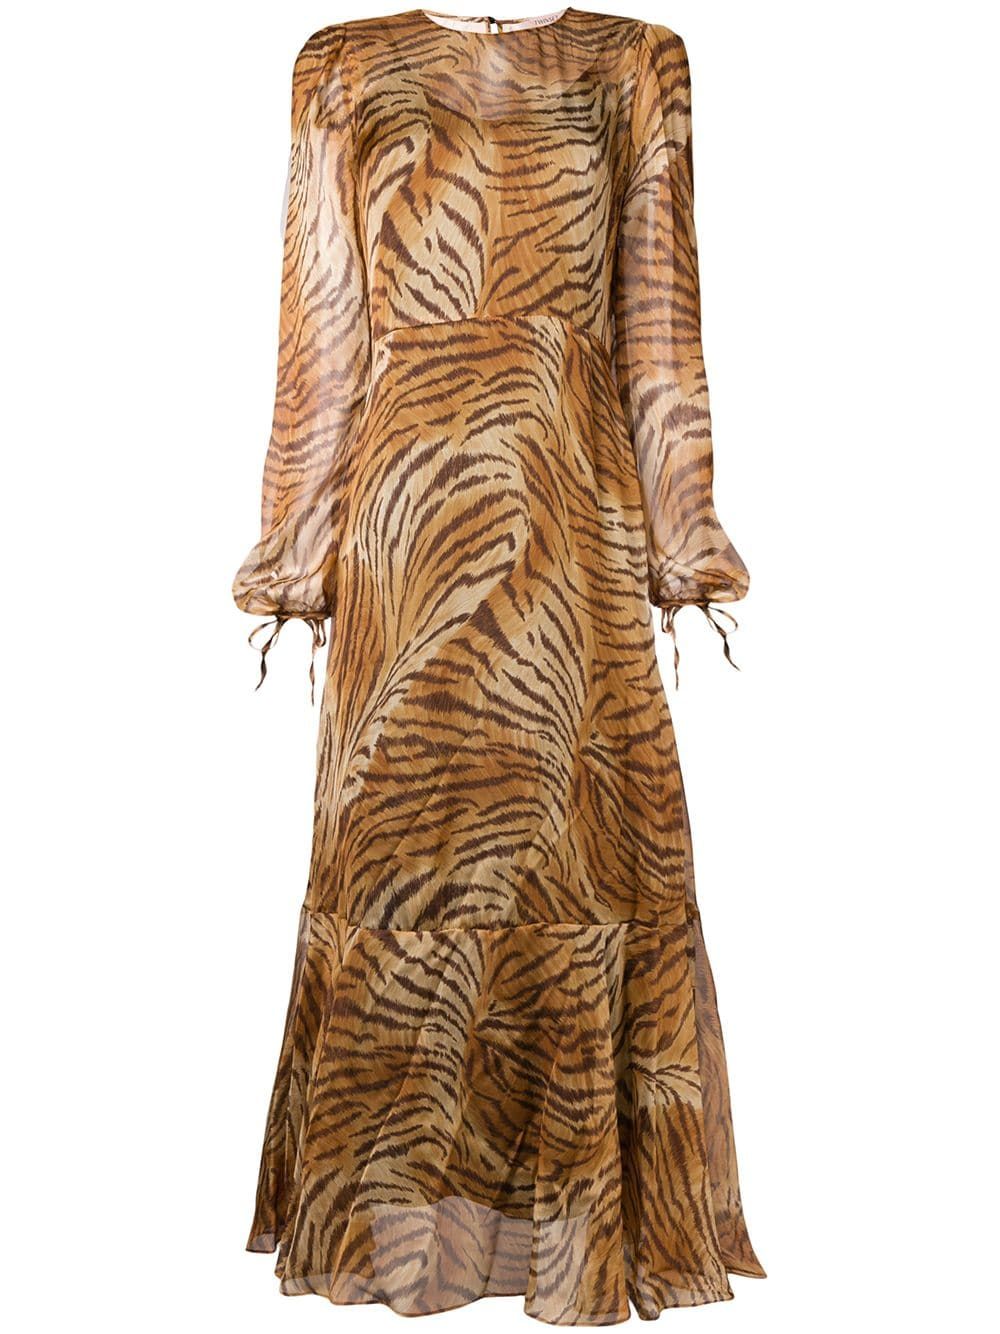 oasis tiger dress